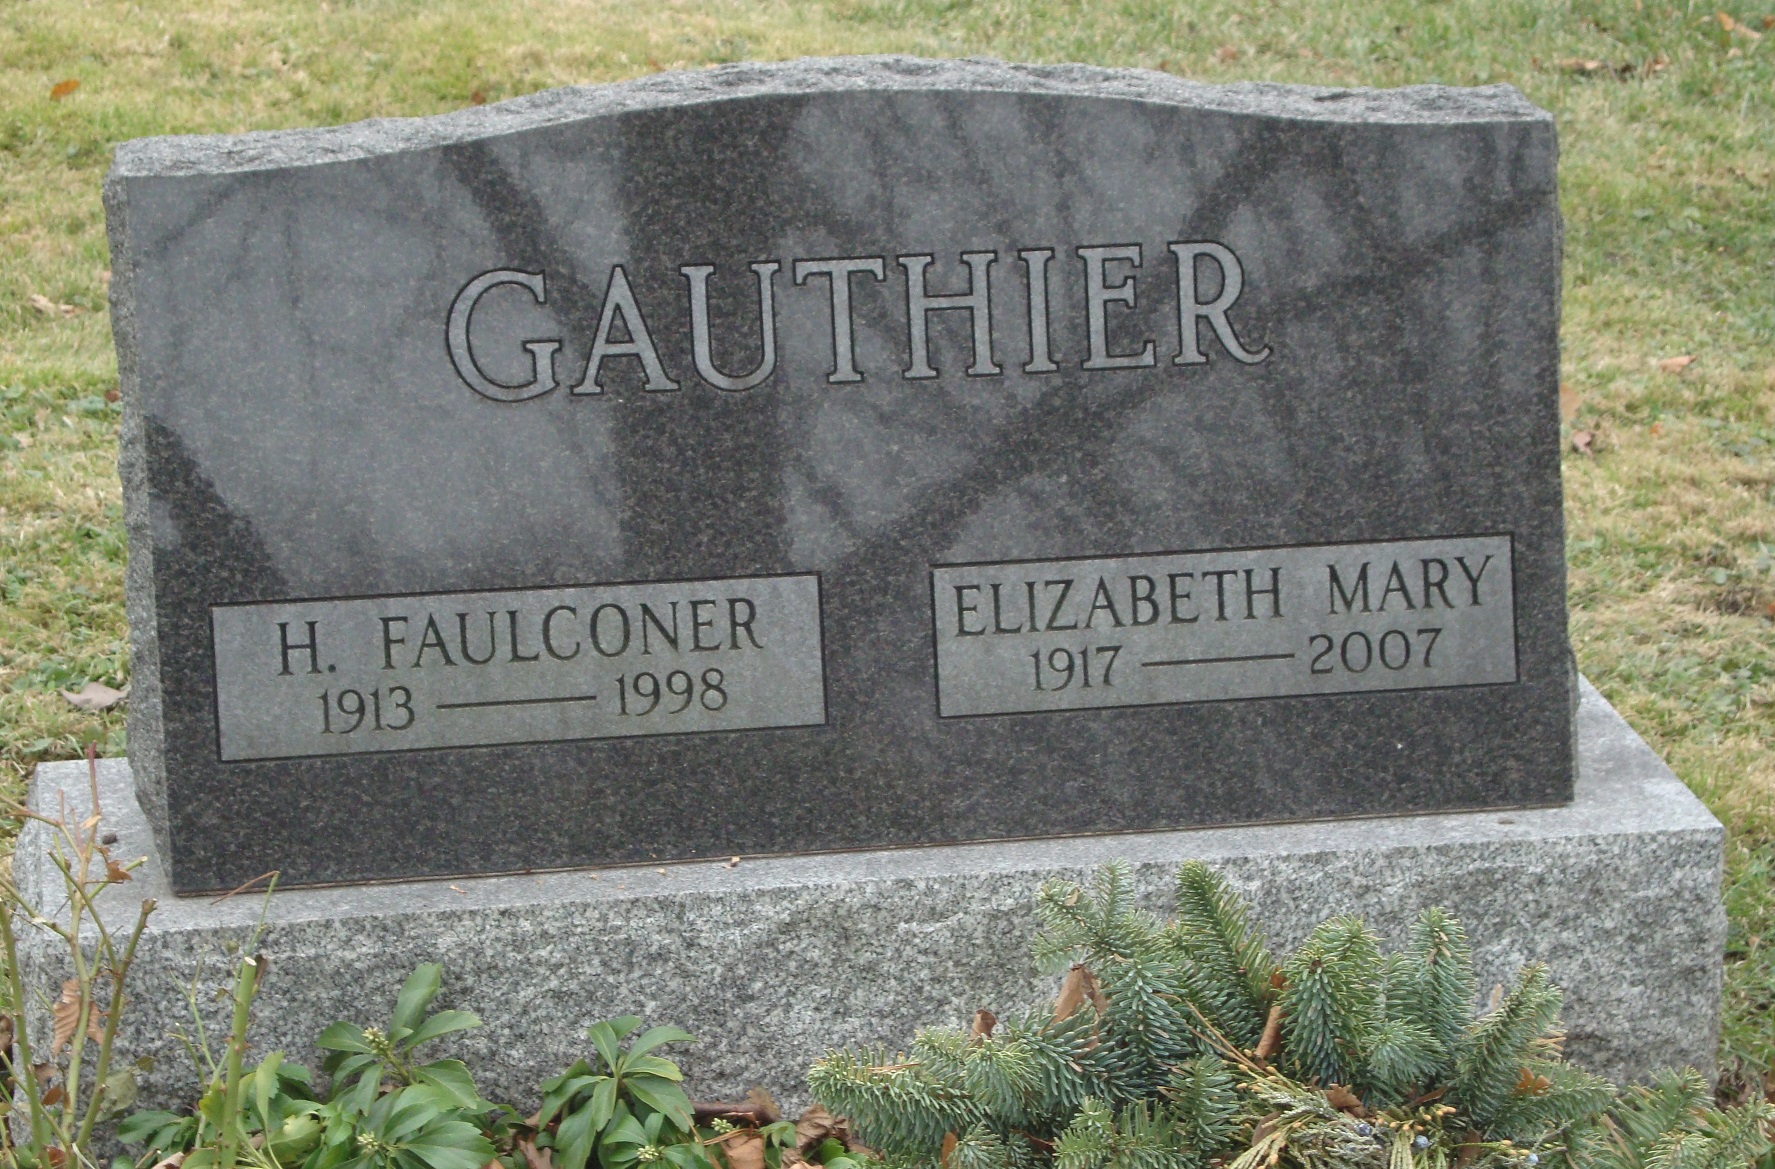 GAUTHIER-H.Faulconer 1913-1998_Elizabeth Mary 1917-2007